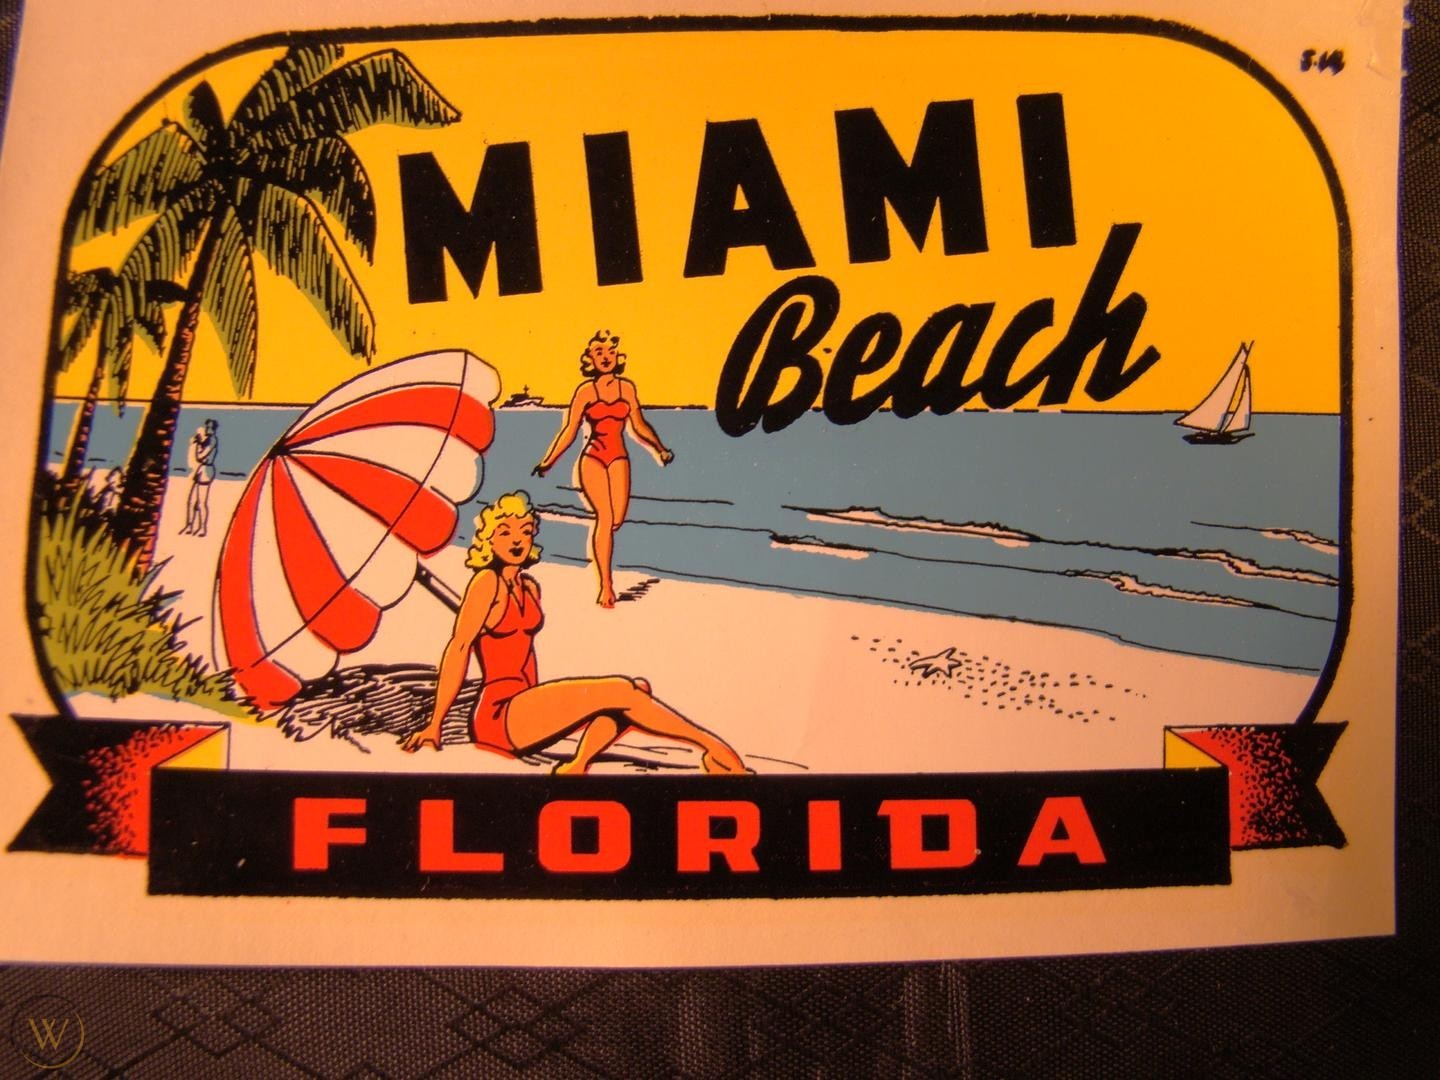 A poster of Miami Beach.